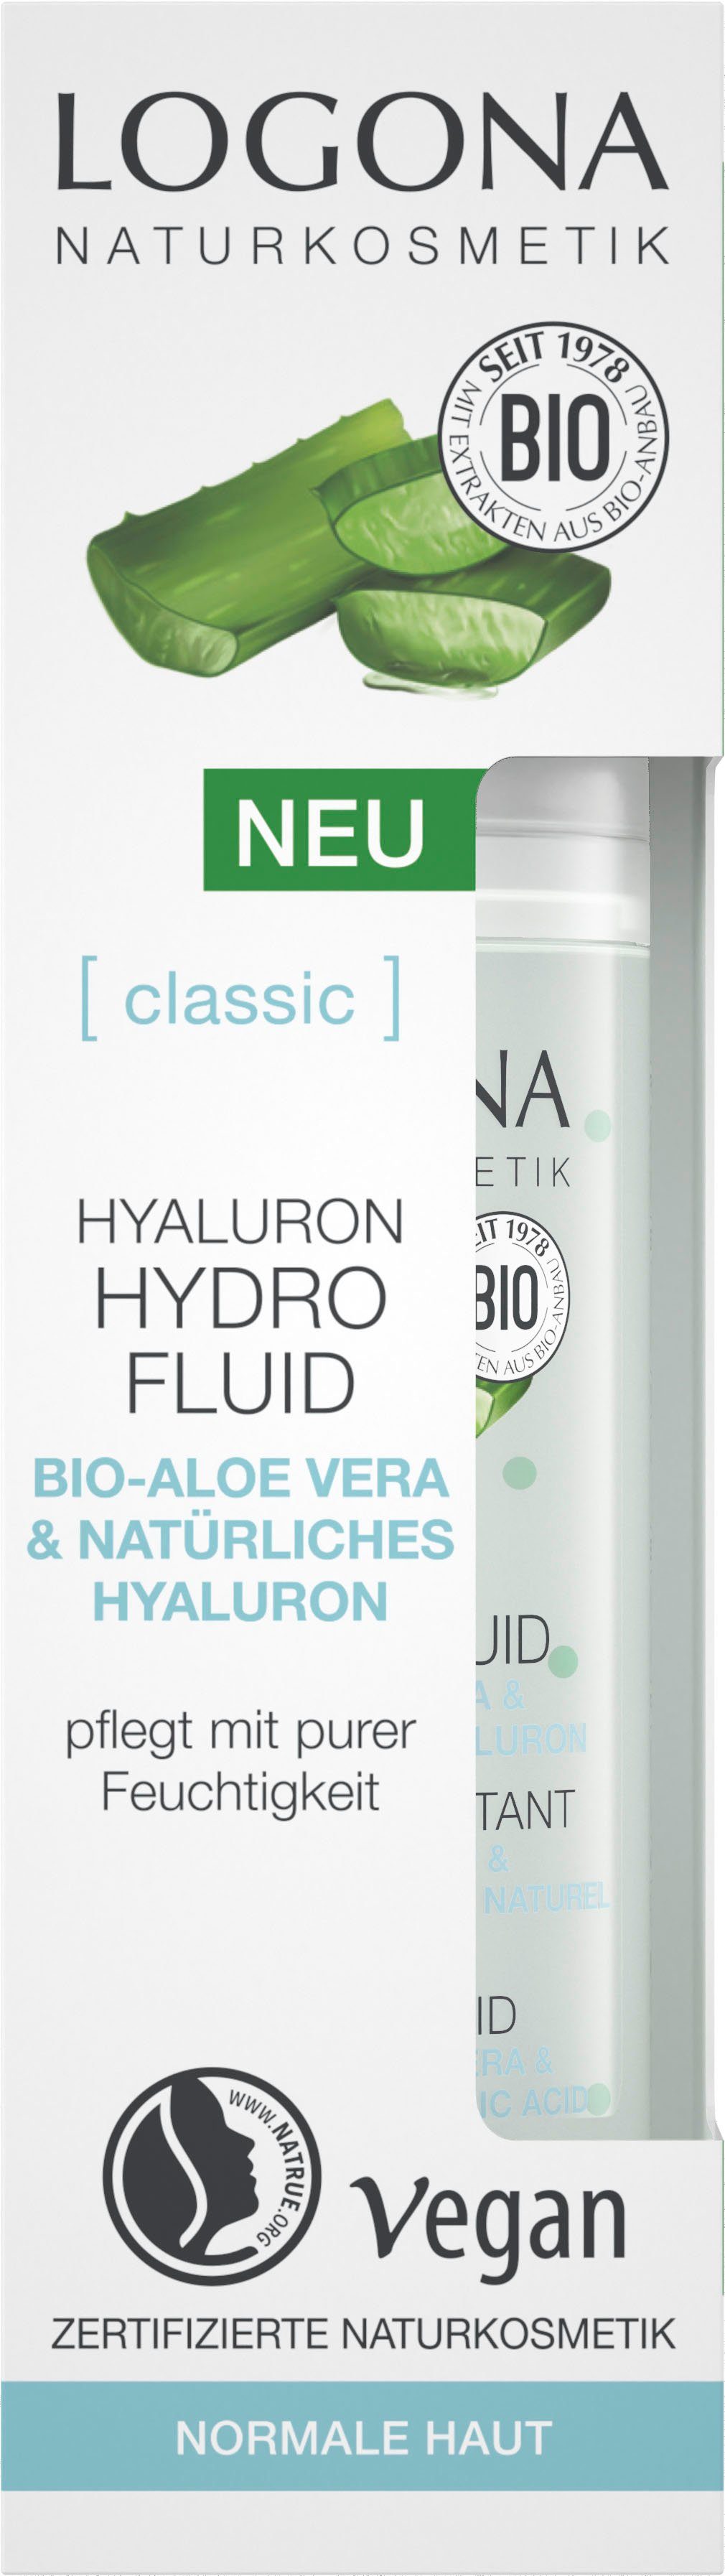 LOGONA Gesichtsfluid Logona [classic] Hyaluron Fluid Hydro